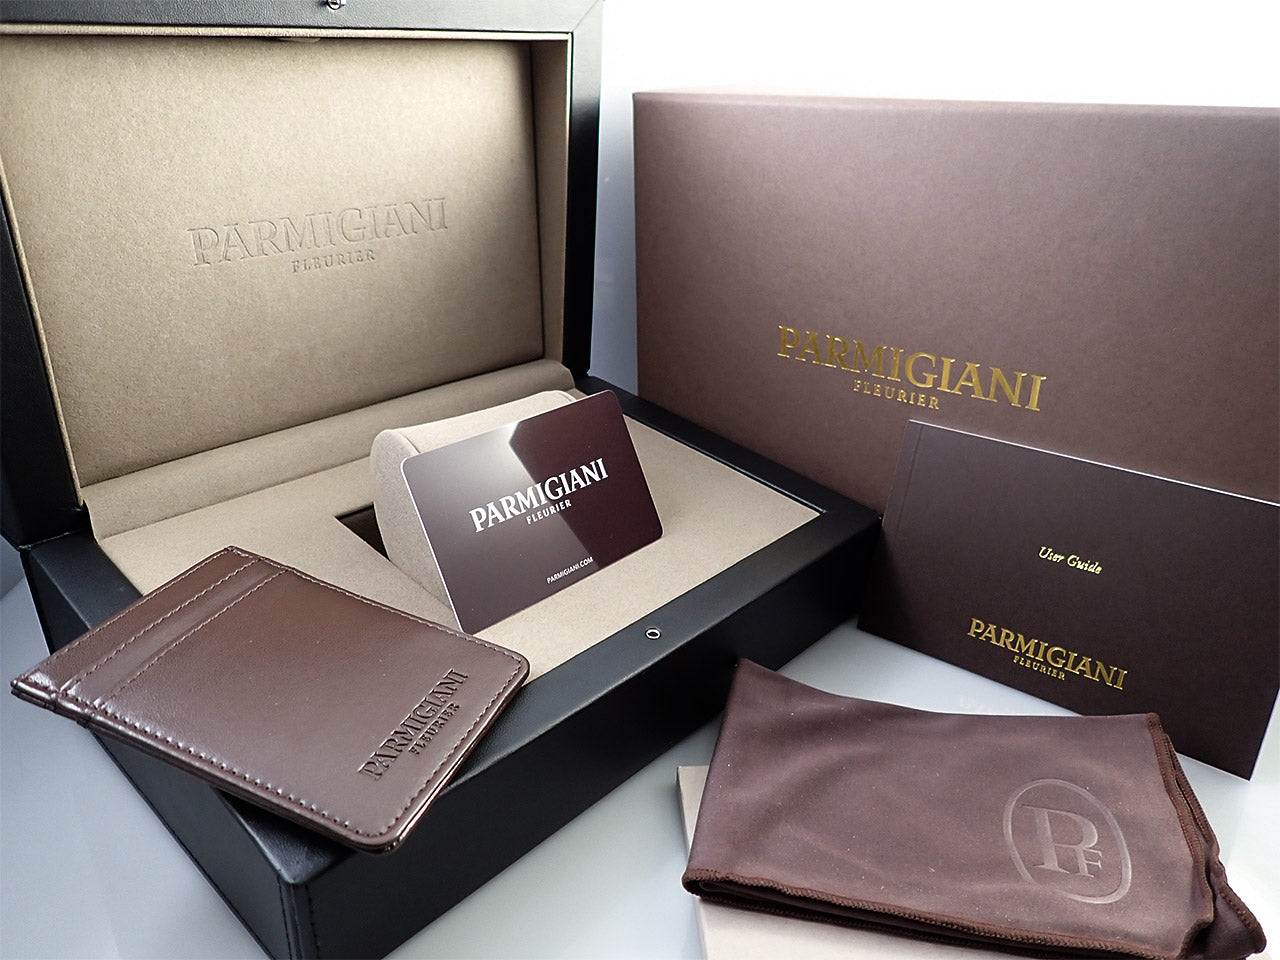 Parmigiani Fleurier Tonda PF Chronograph &lt;Warranty, Box, etc.&gt;